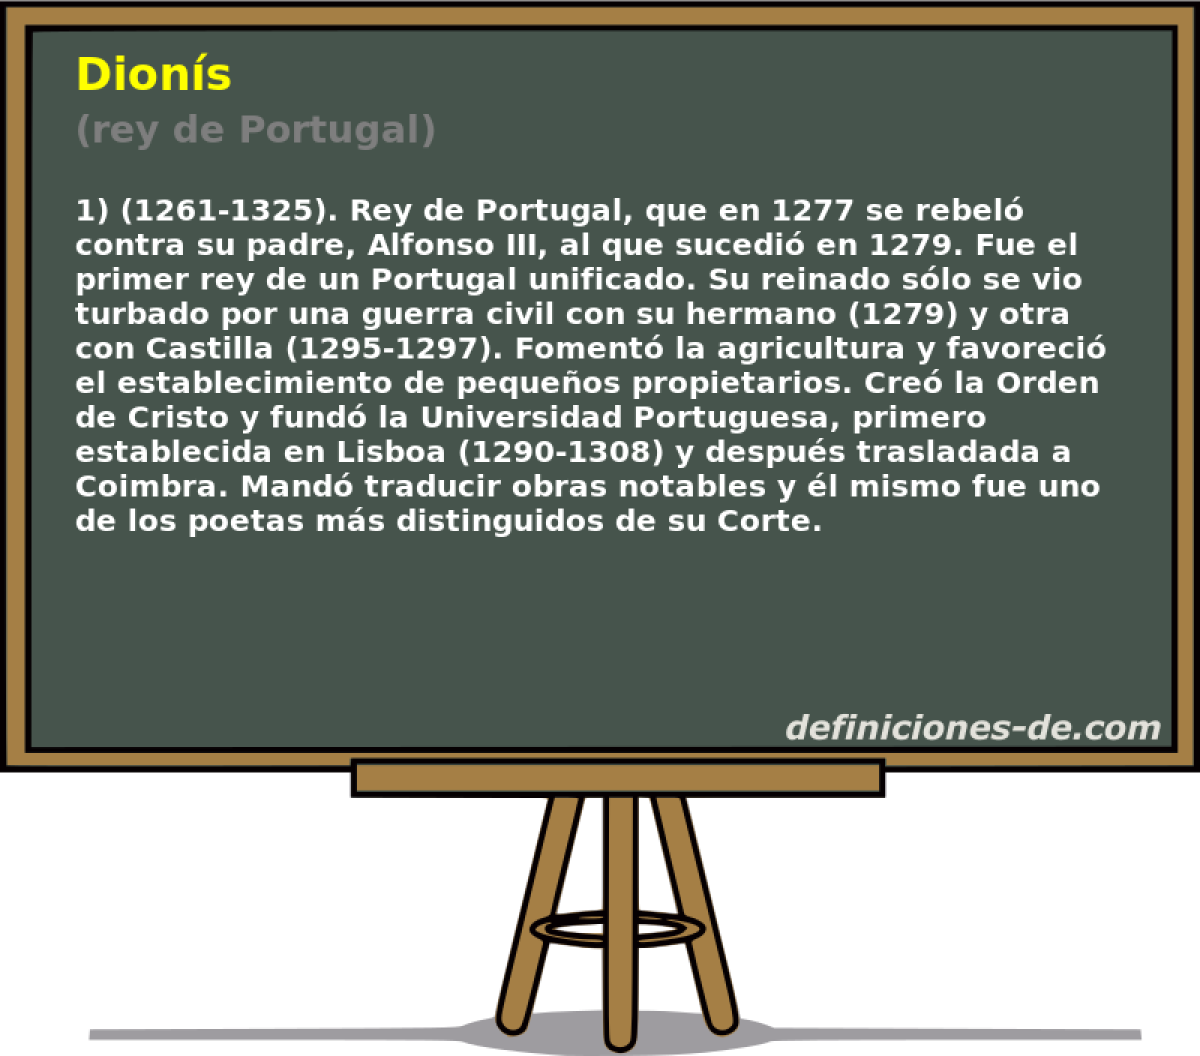 Dions (rey de Portugal)